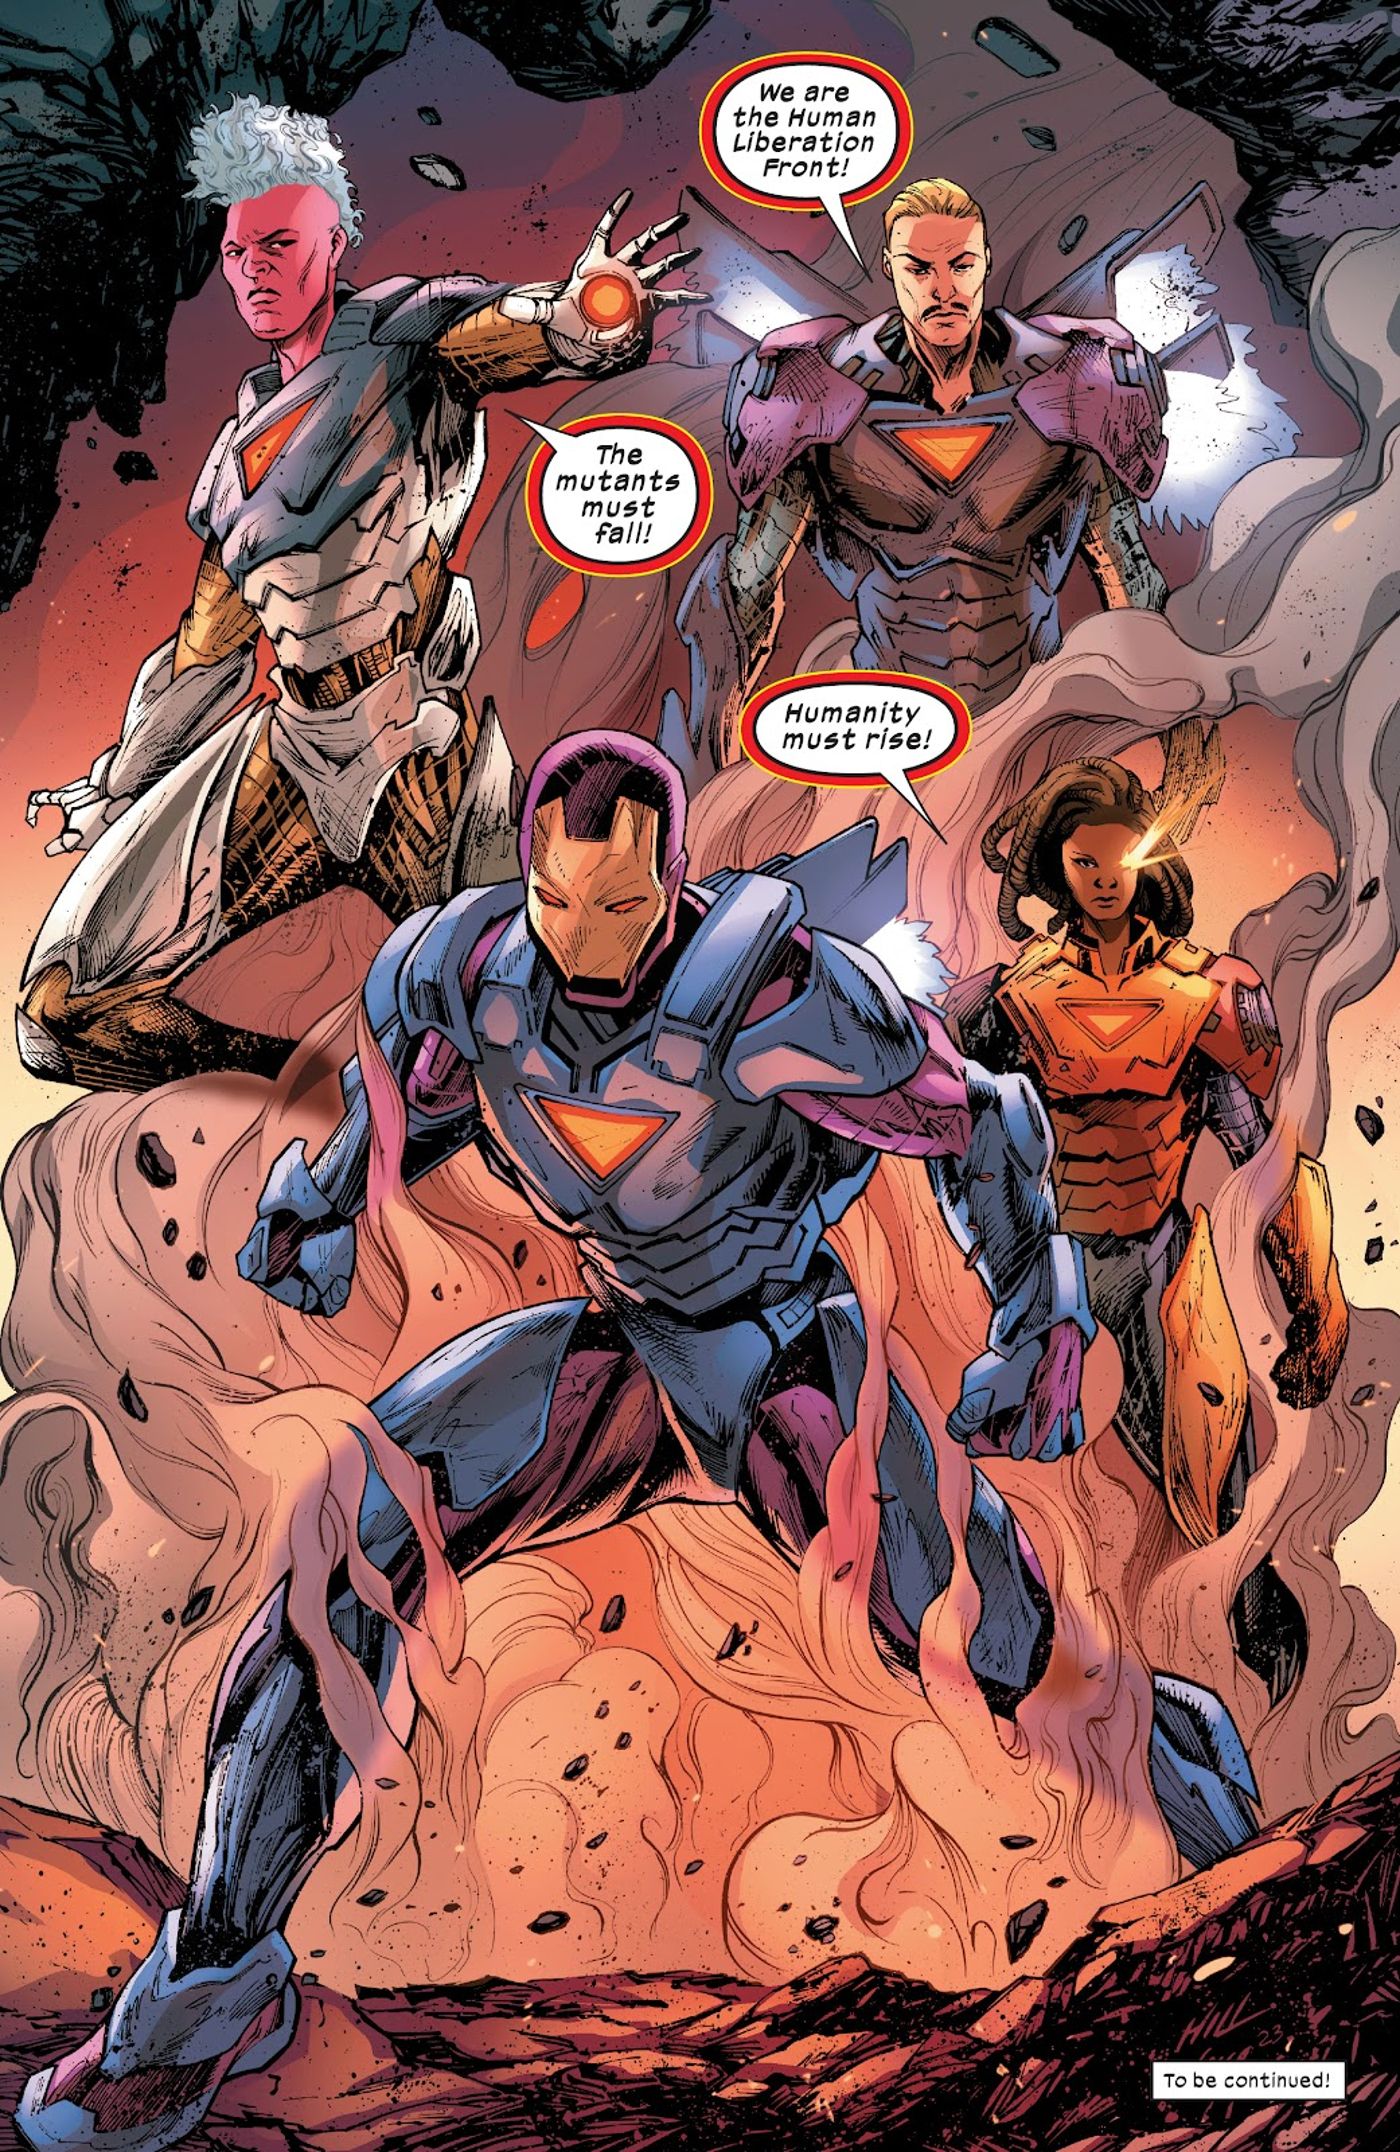 Iron Man’s New Anti-Mutant Armor Confirms His Dark Potential